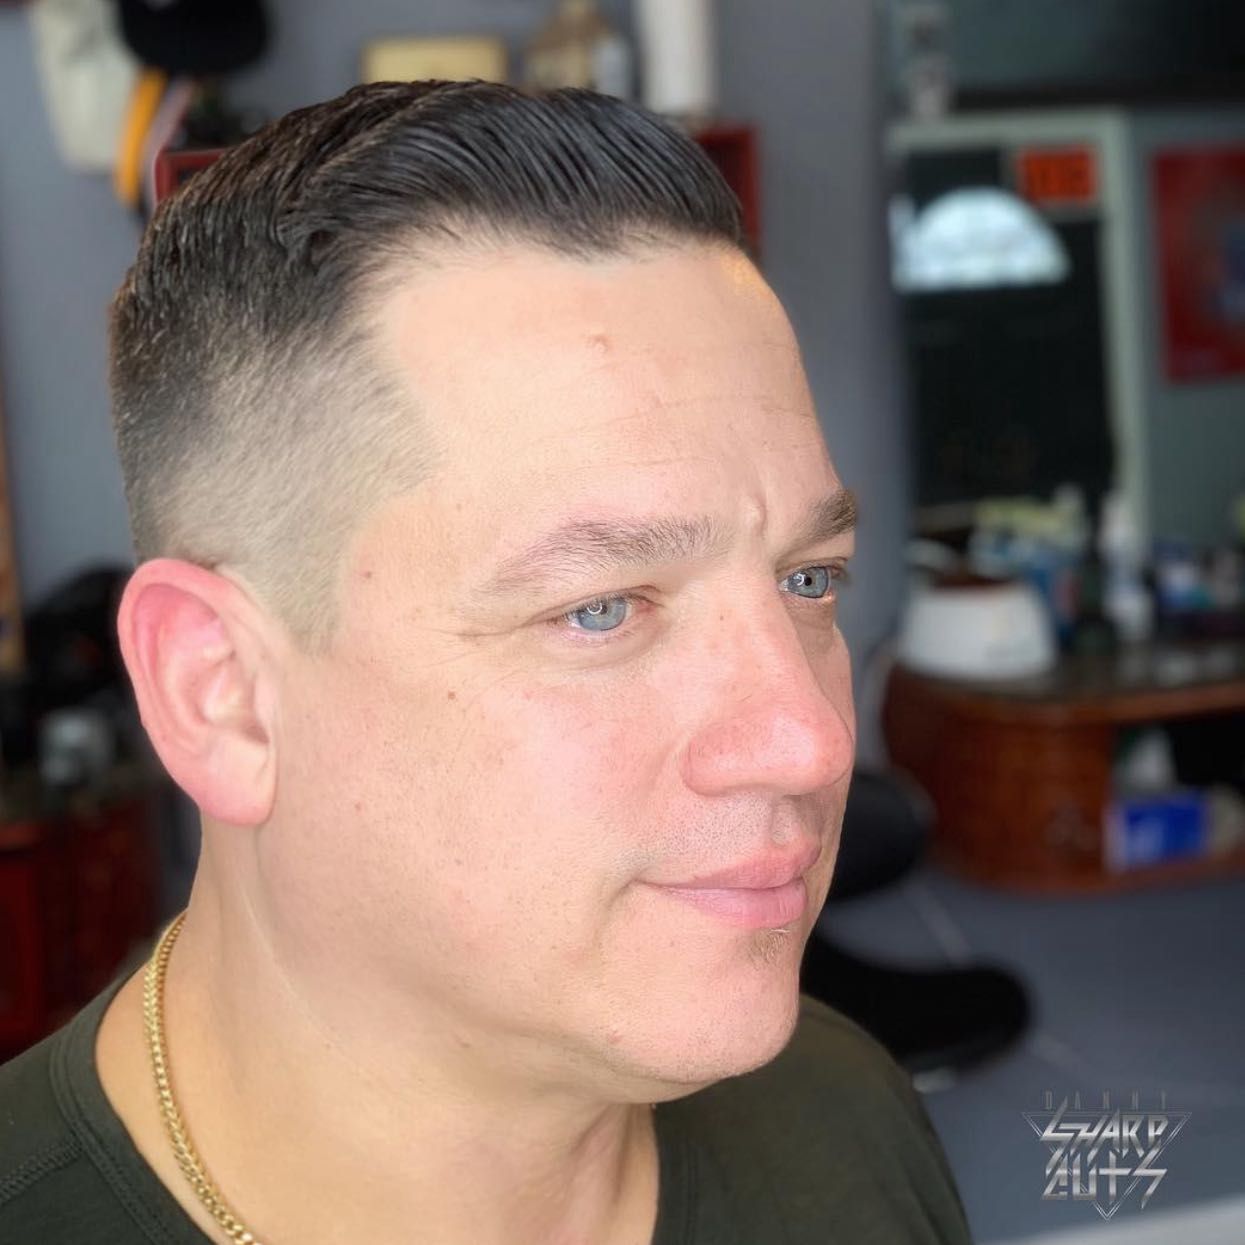 Haircut & Eyebrow Shape Up W/ Danny portfolio